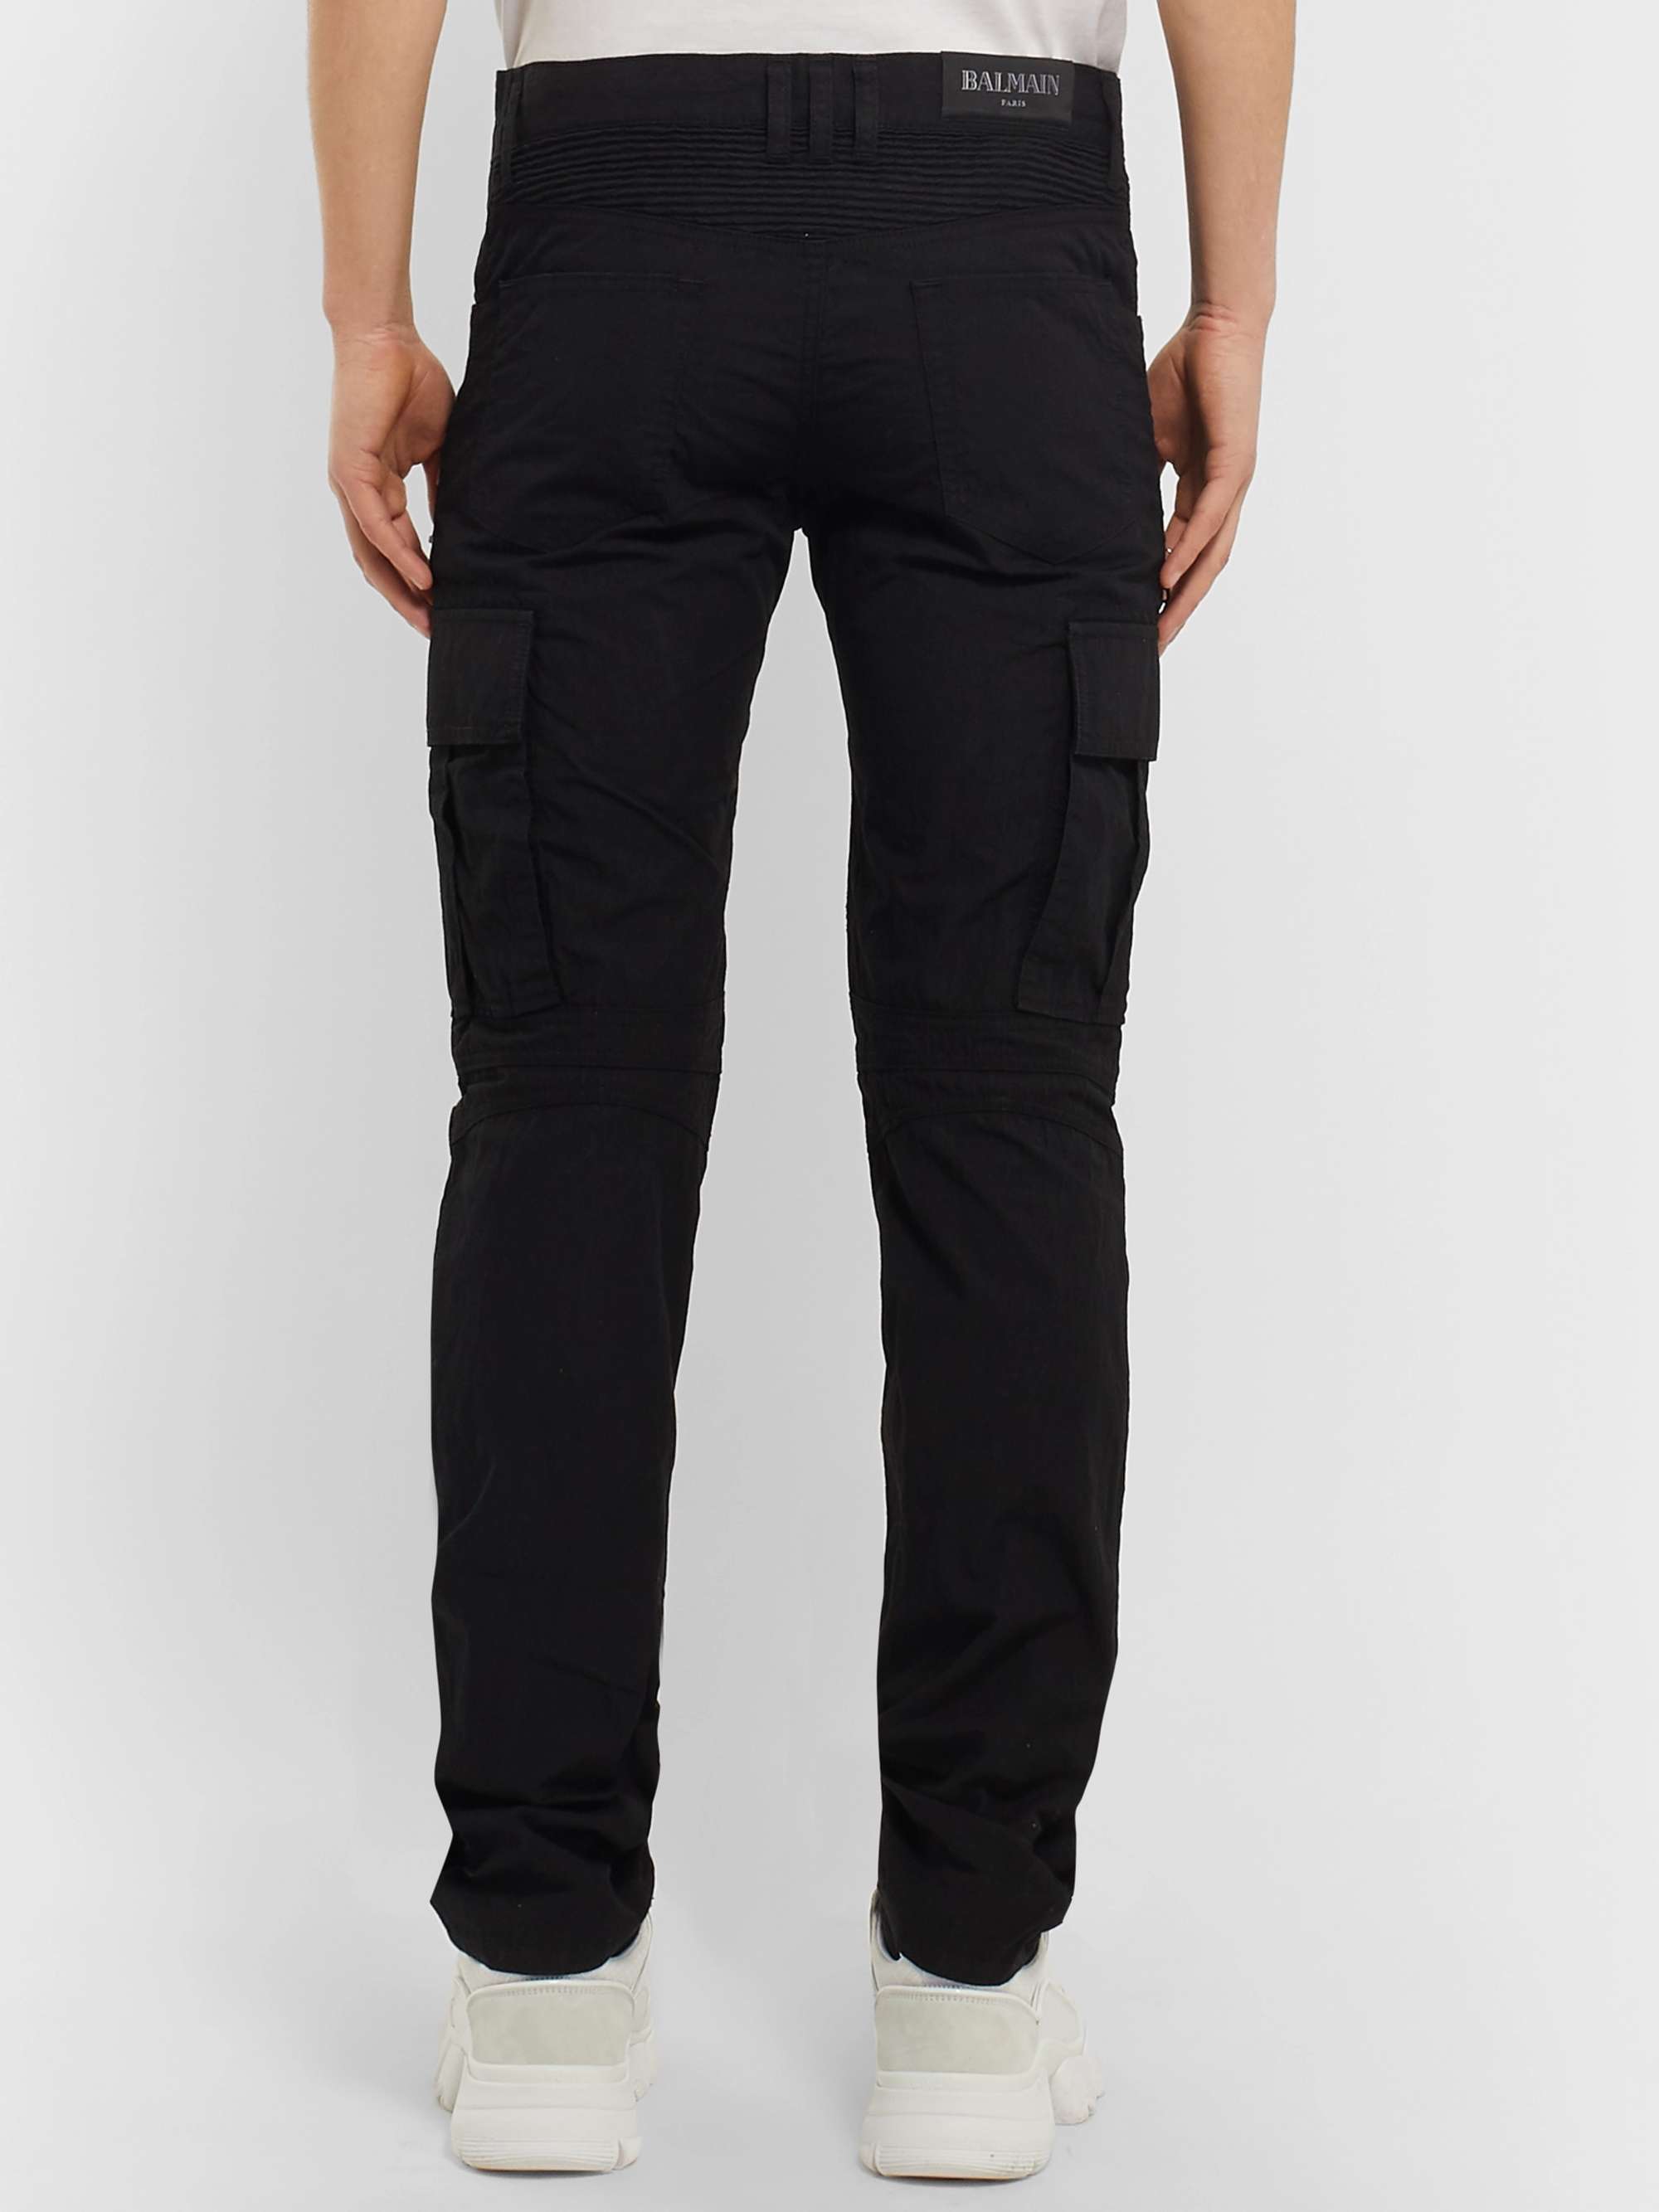 BALMAIN Slim-Fit Cotton-Blend Cargo Trousers for Men | MR PORTER